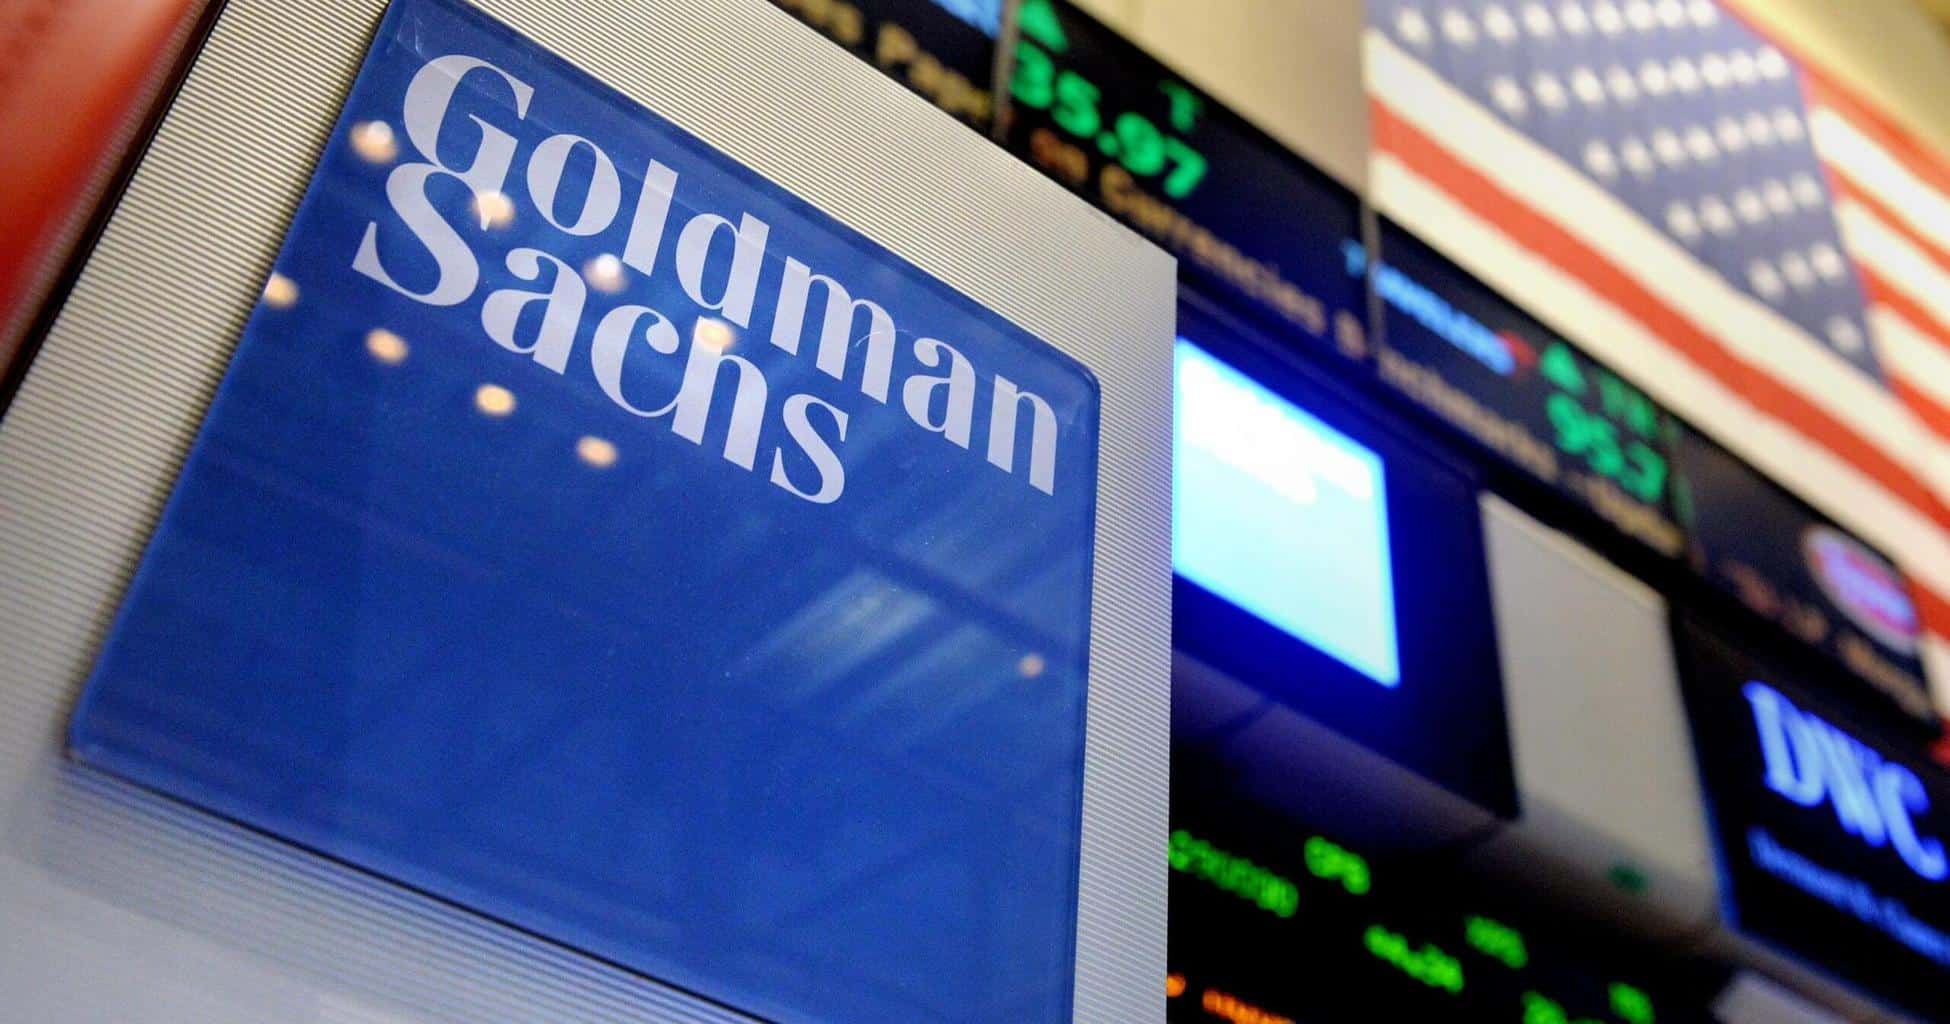 Goldman Sachs stock screen